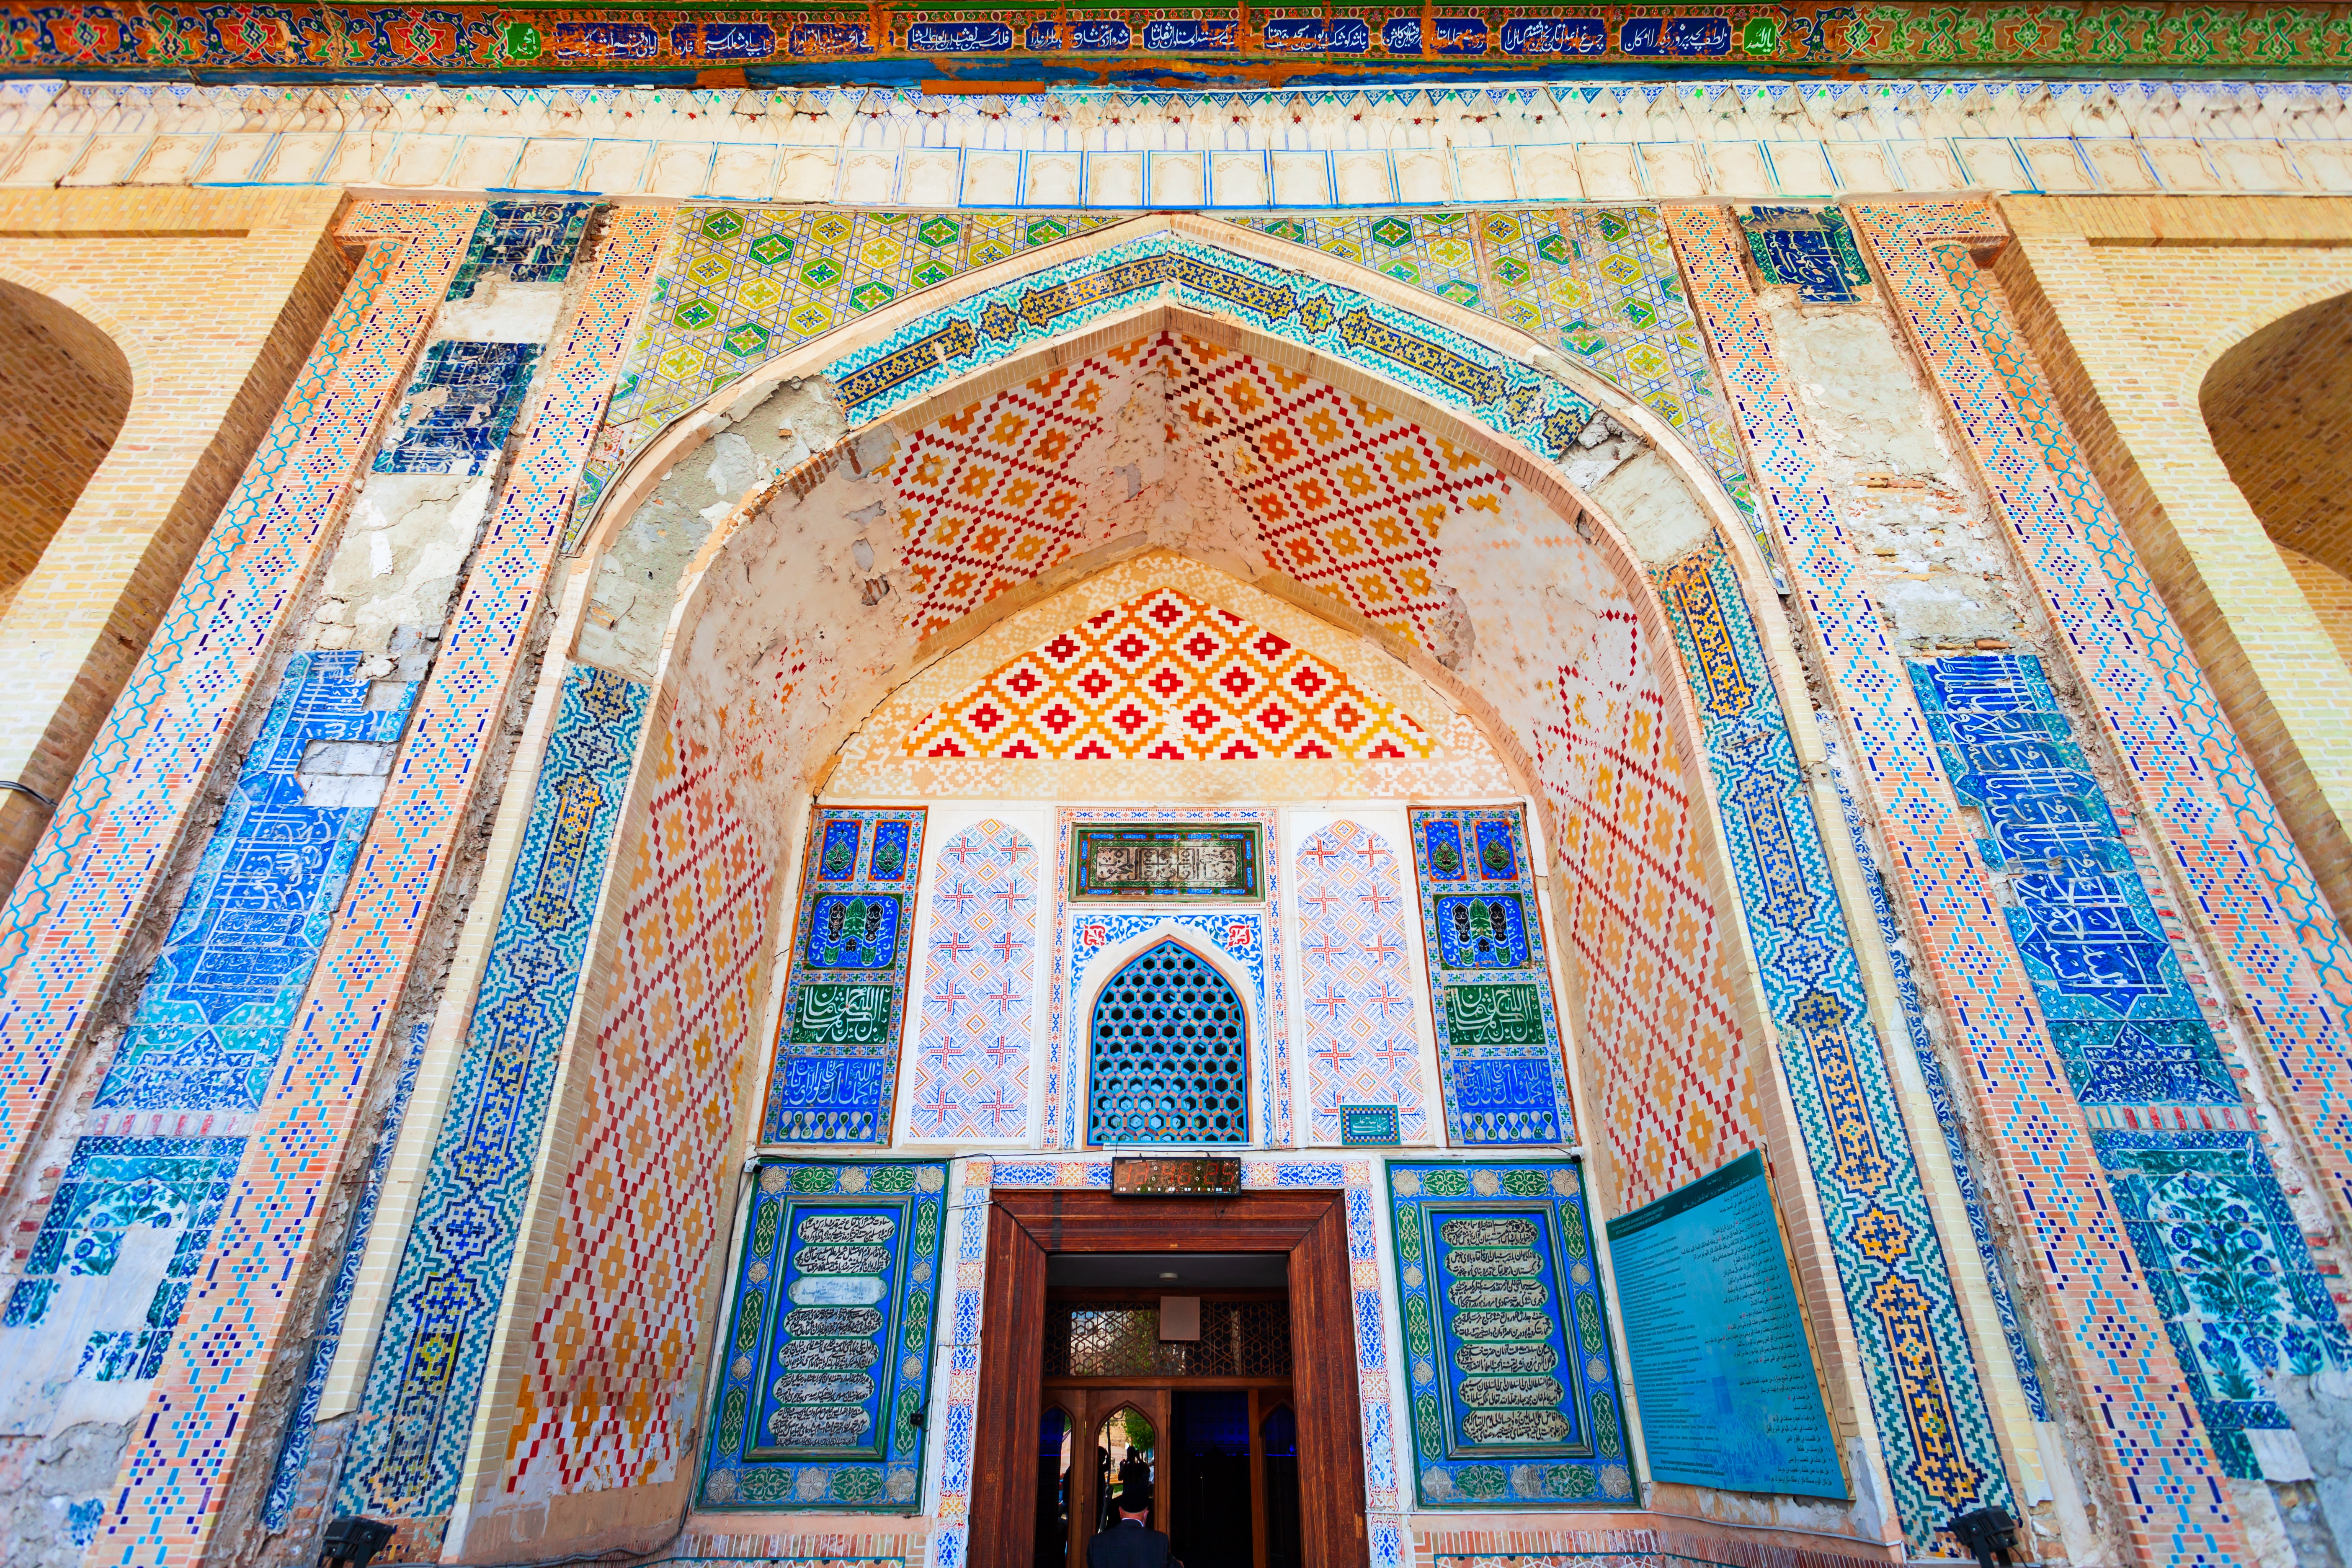 Interior of the Mosque - Photo by saiko3p / Shutterstock.com